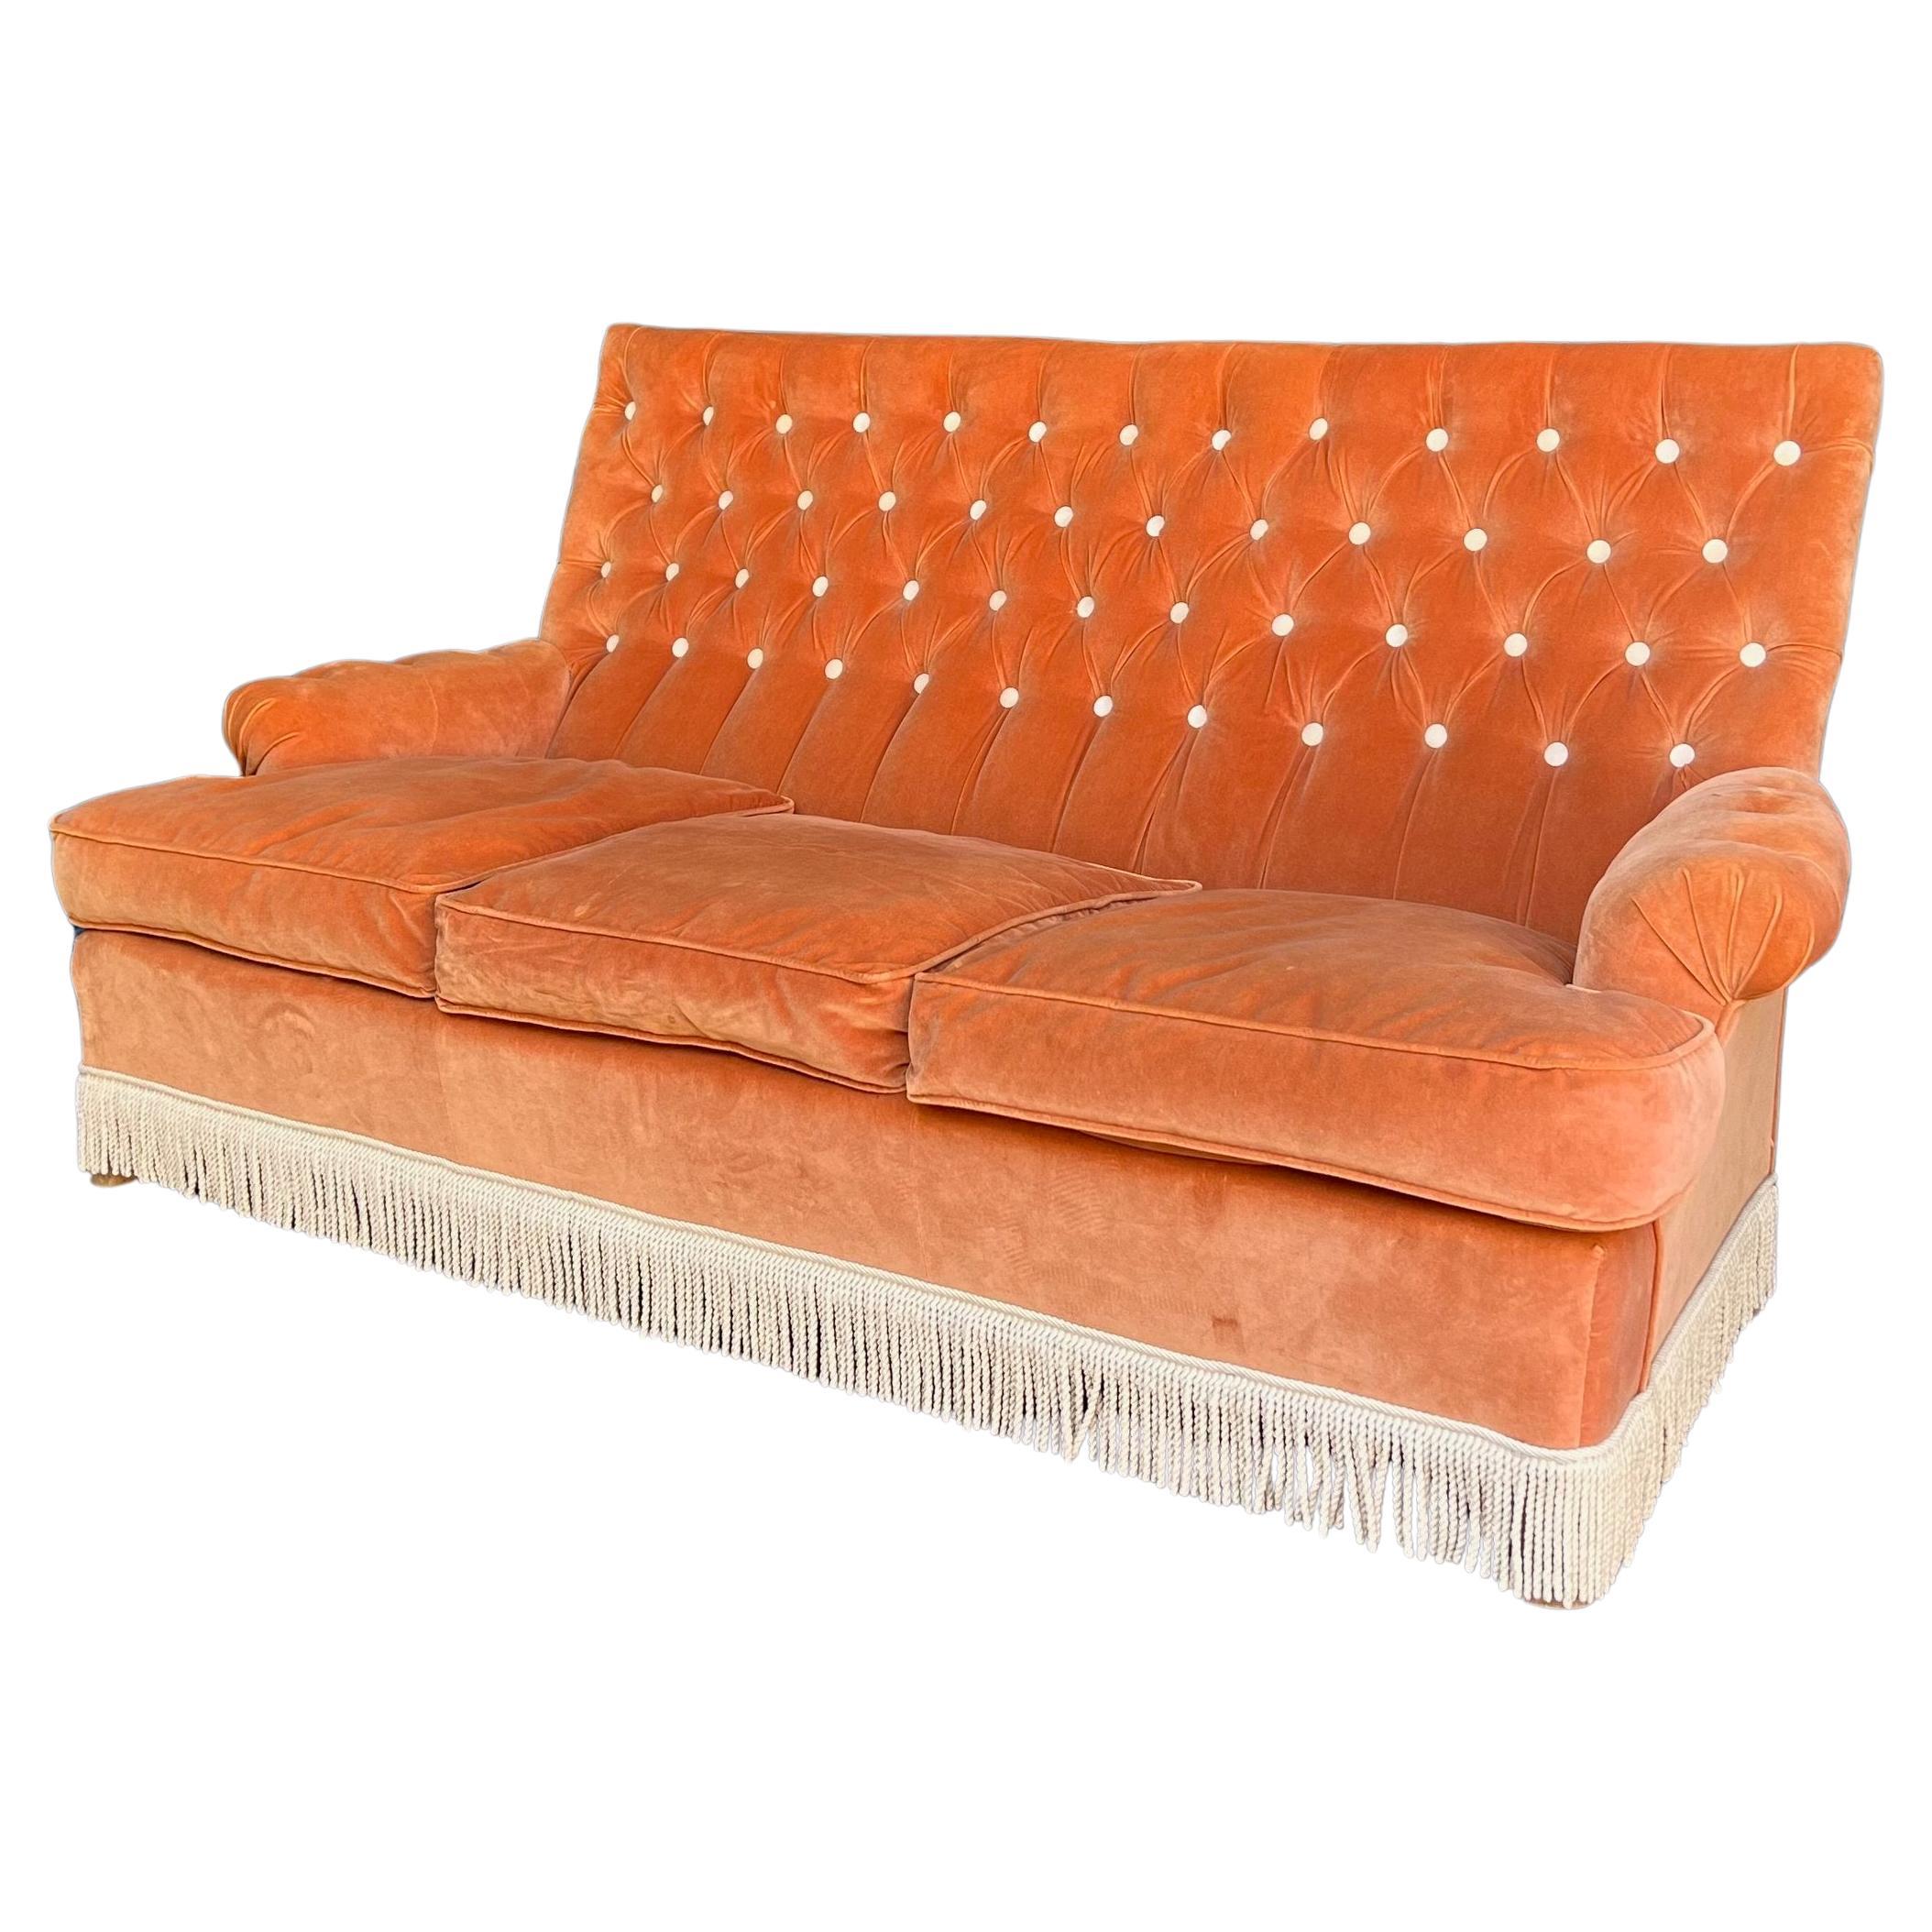 French Napoleon III Sofa in Pale Orange Velvet and White Fringe For Sale